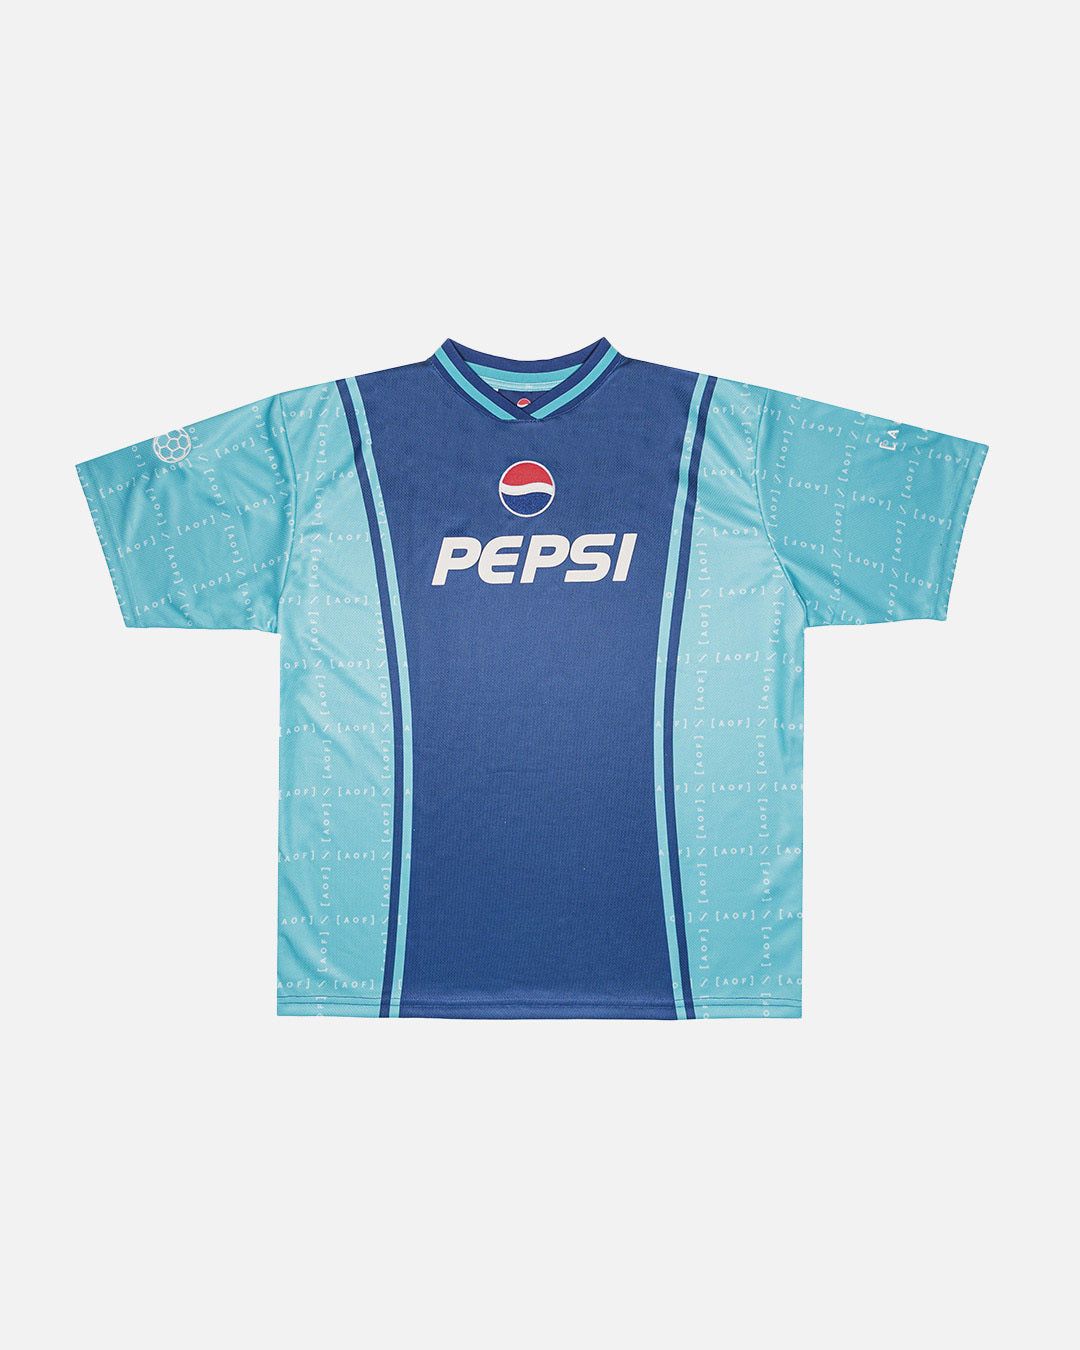 Pepsi x AOF - Football Shirt